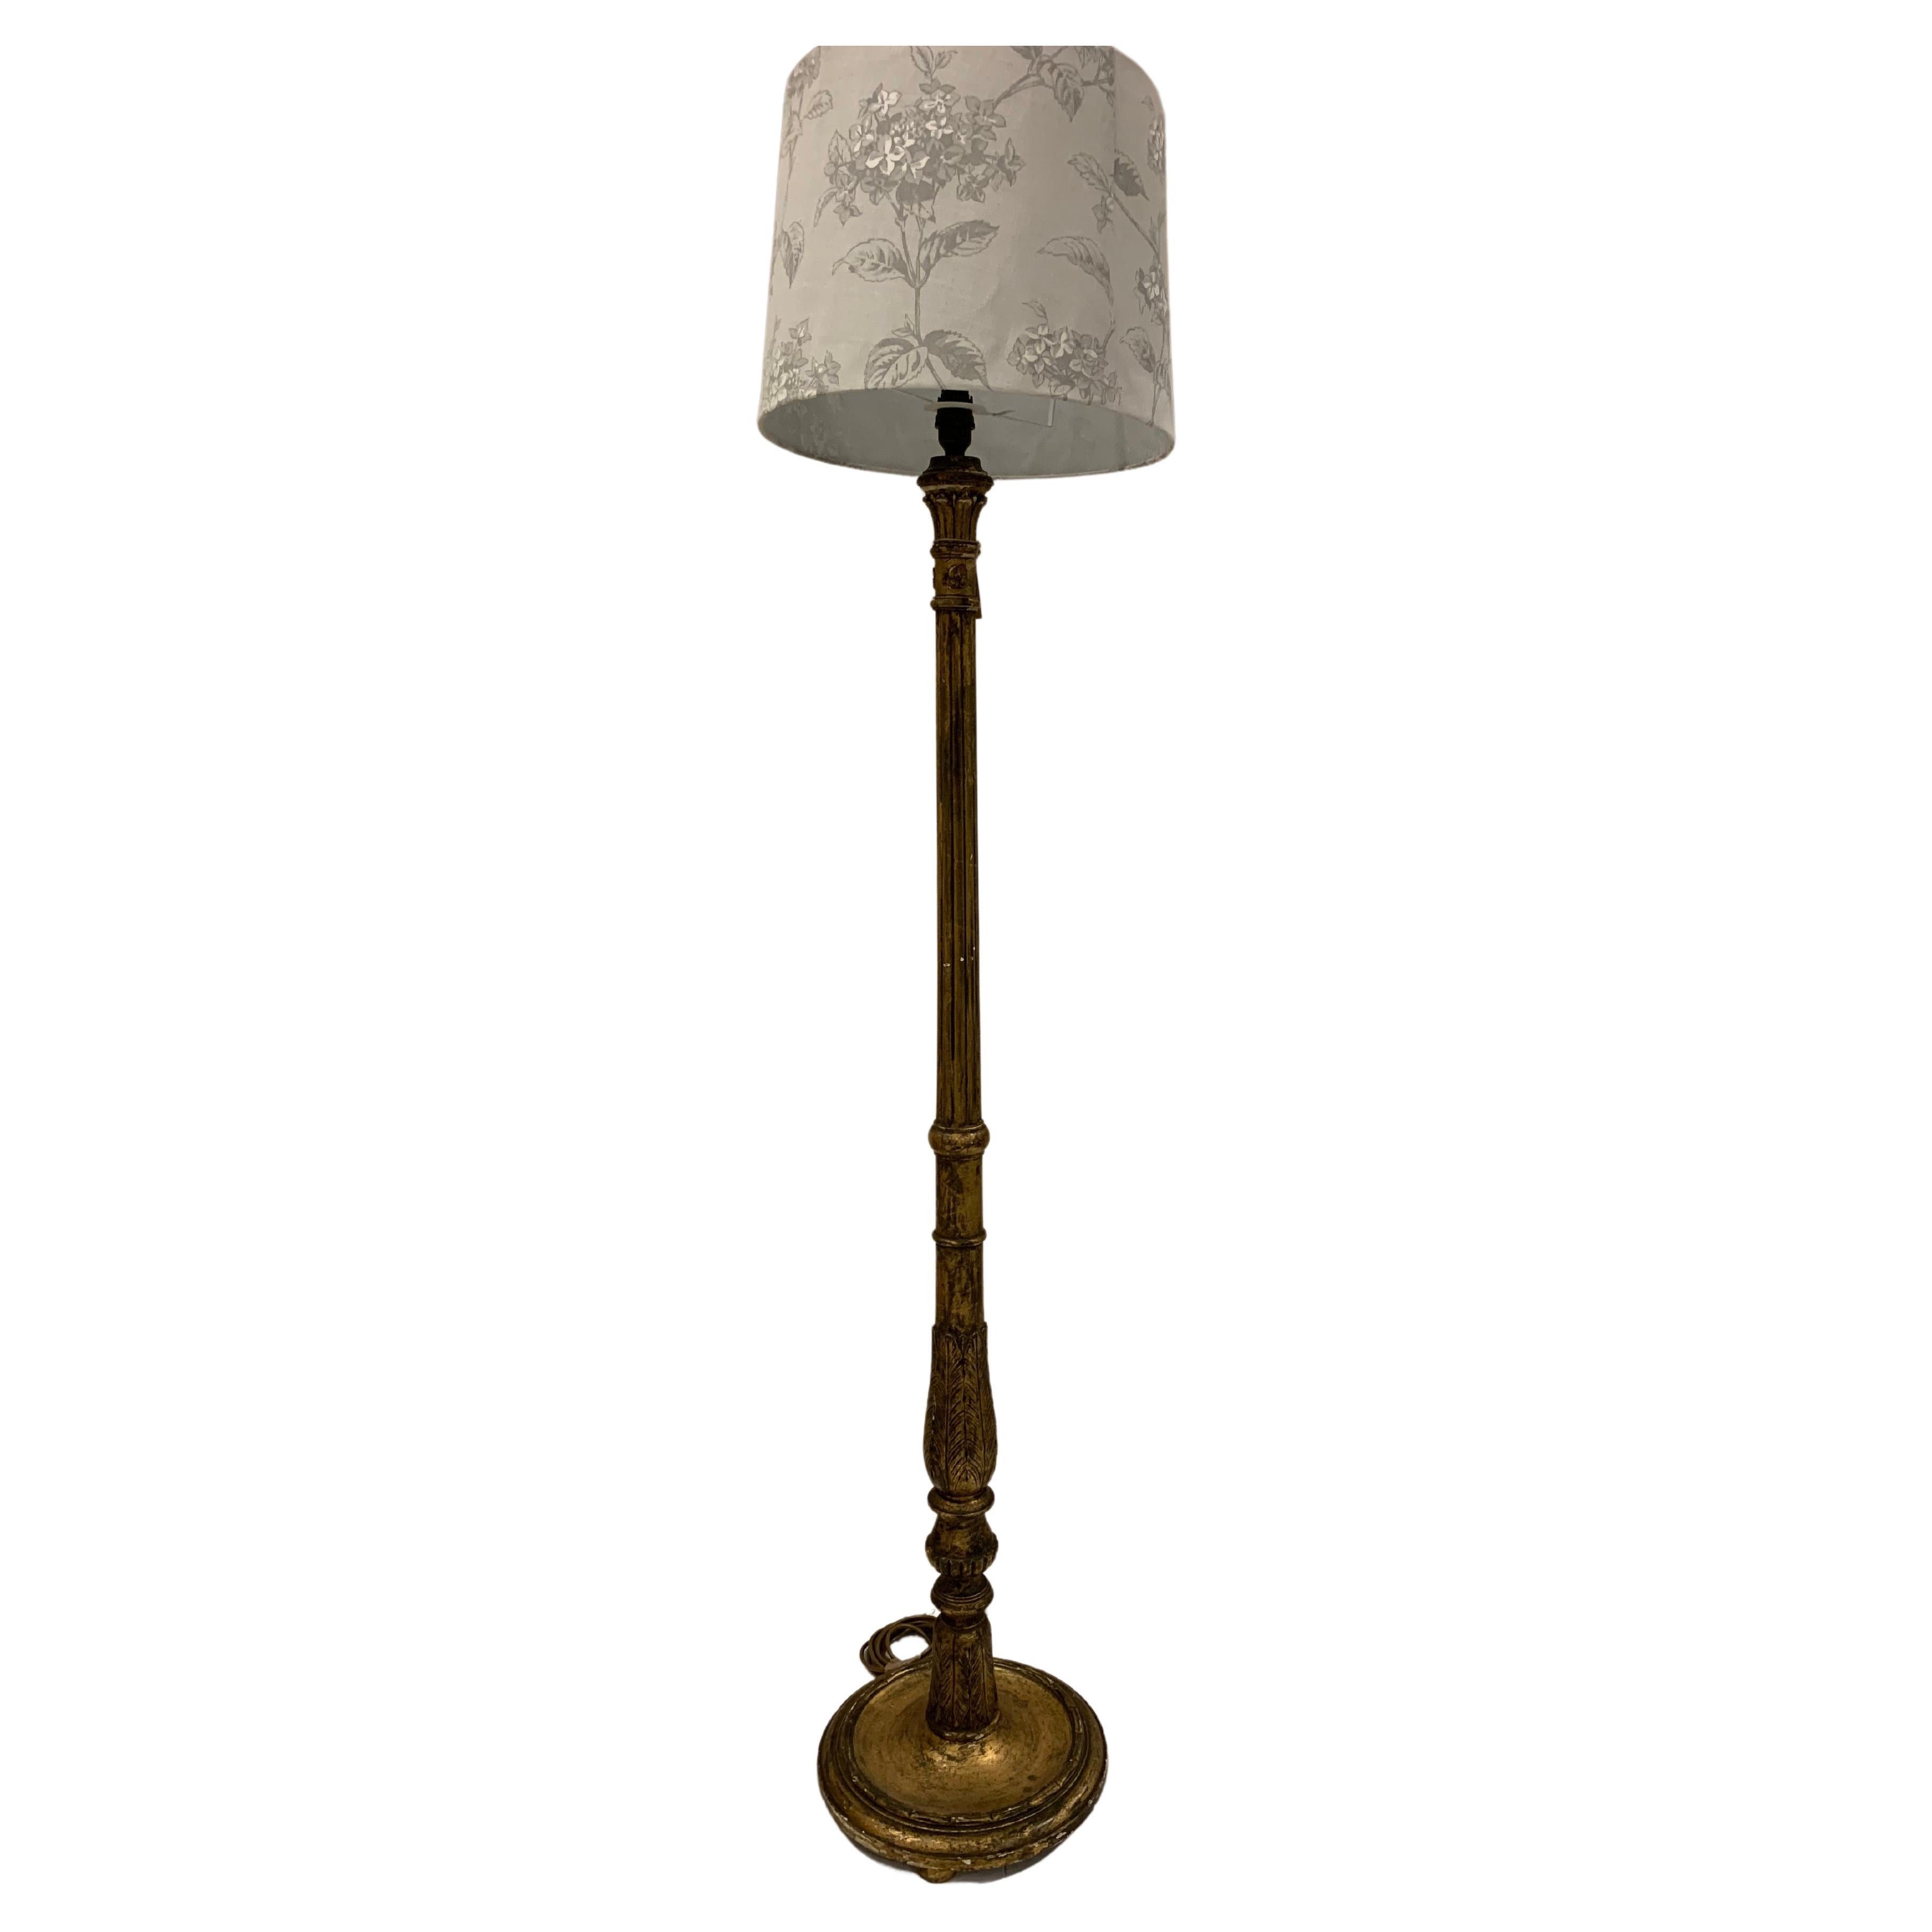 1930s Italian Gilt Standard Floor Lamp with Plaster Flower Decoration